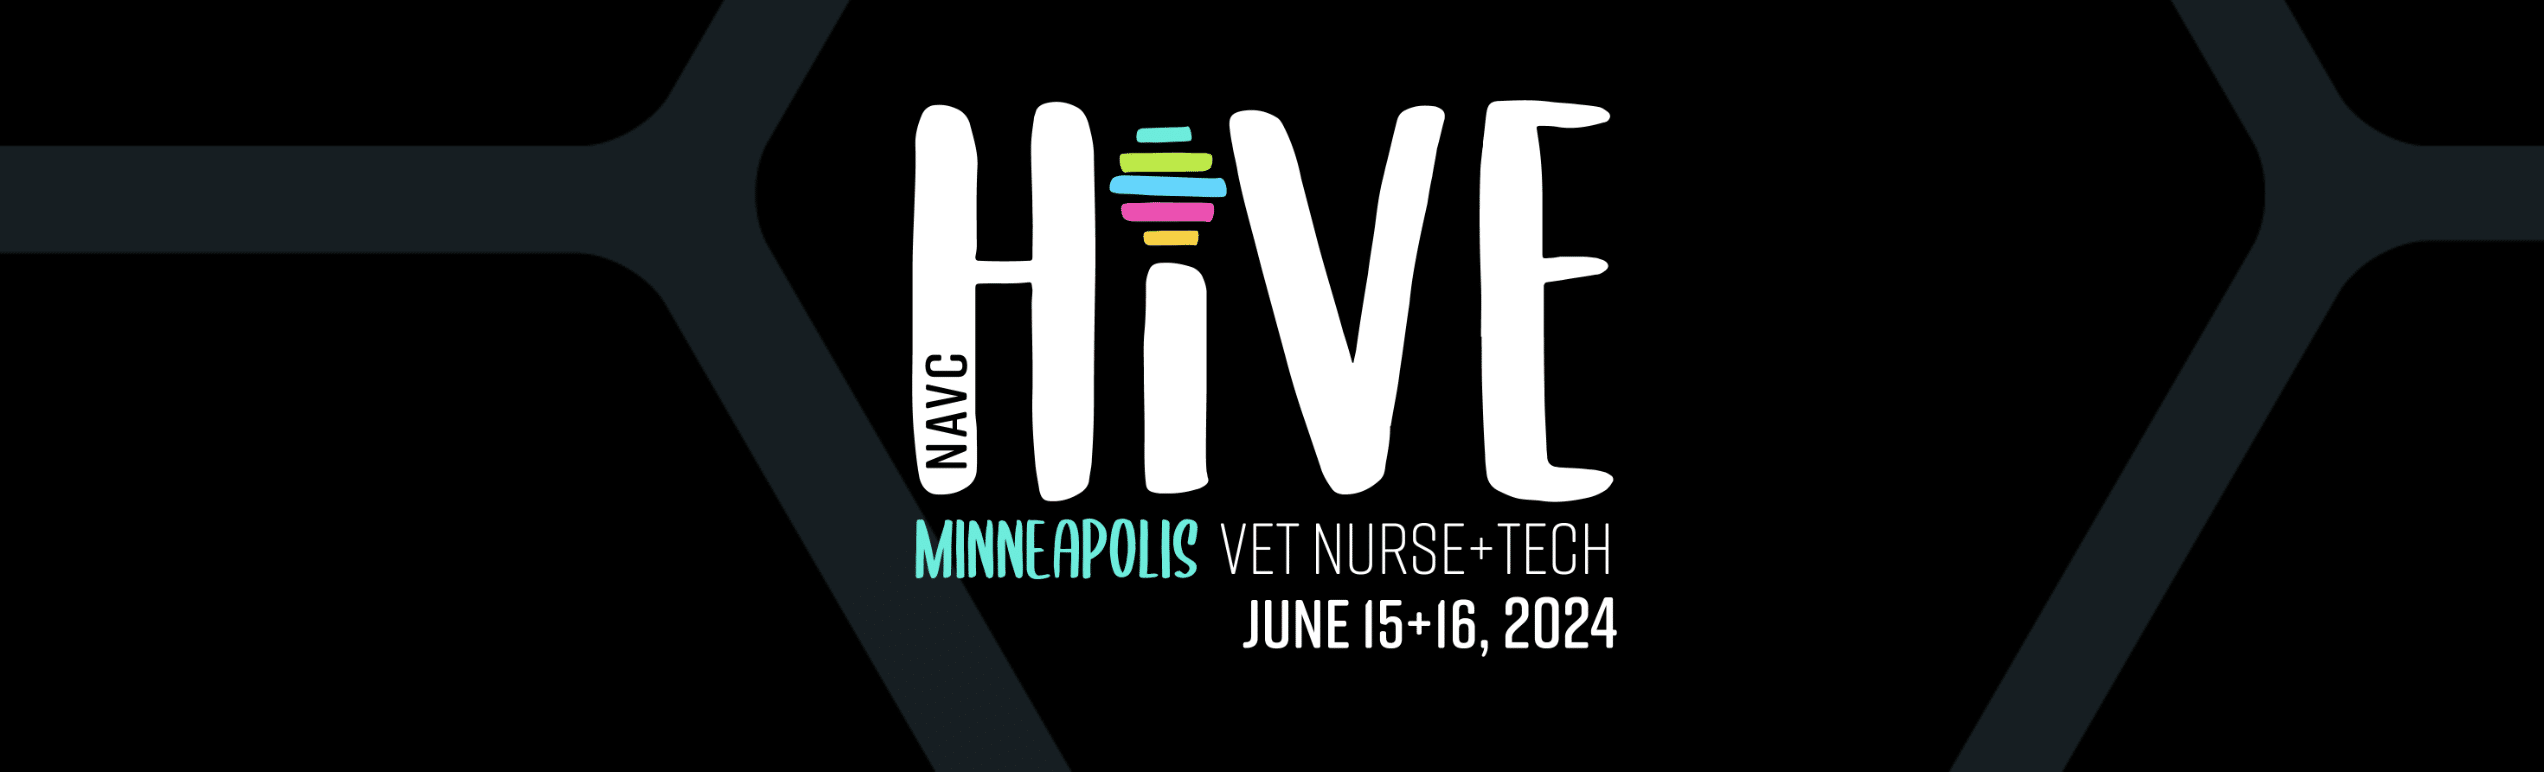 Hive Minneapolis Vet+Tech